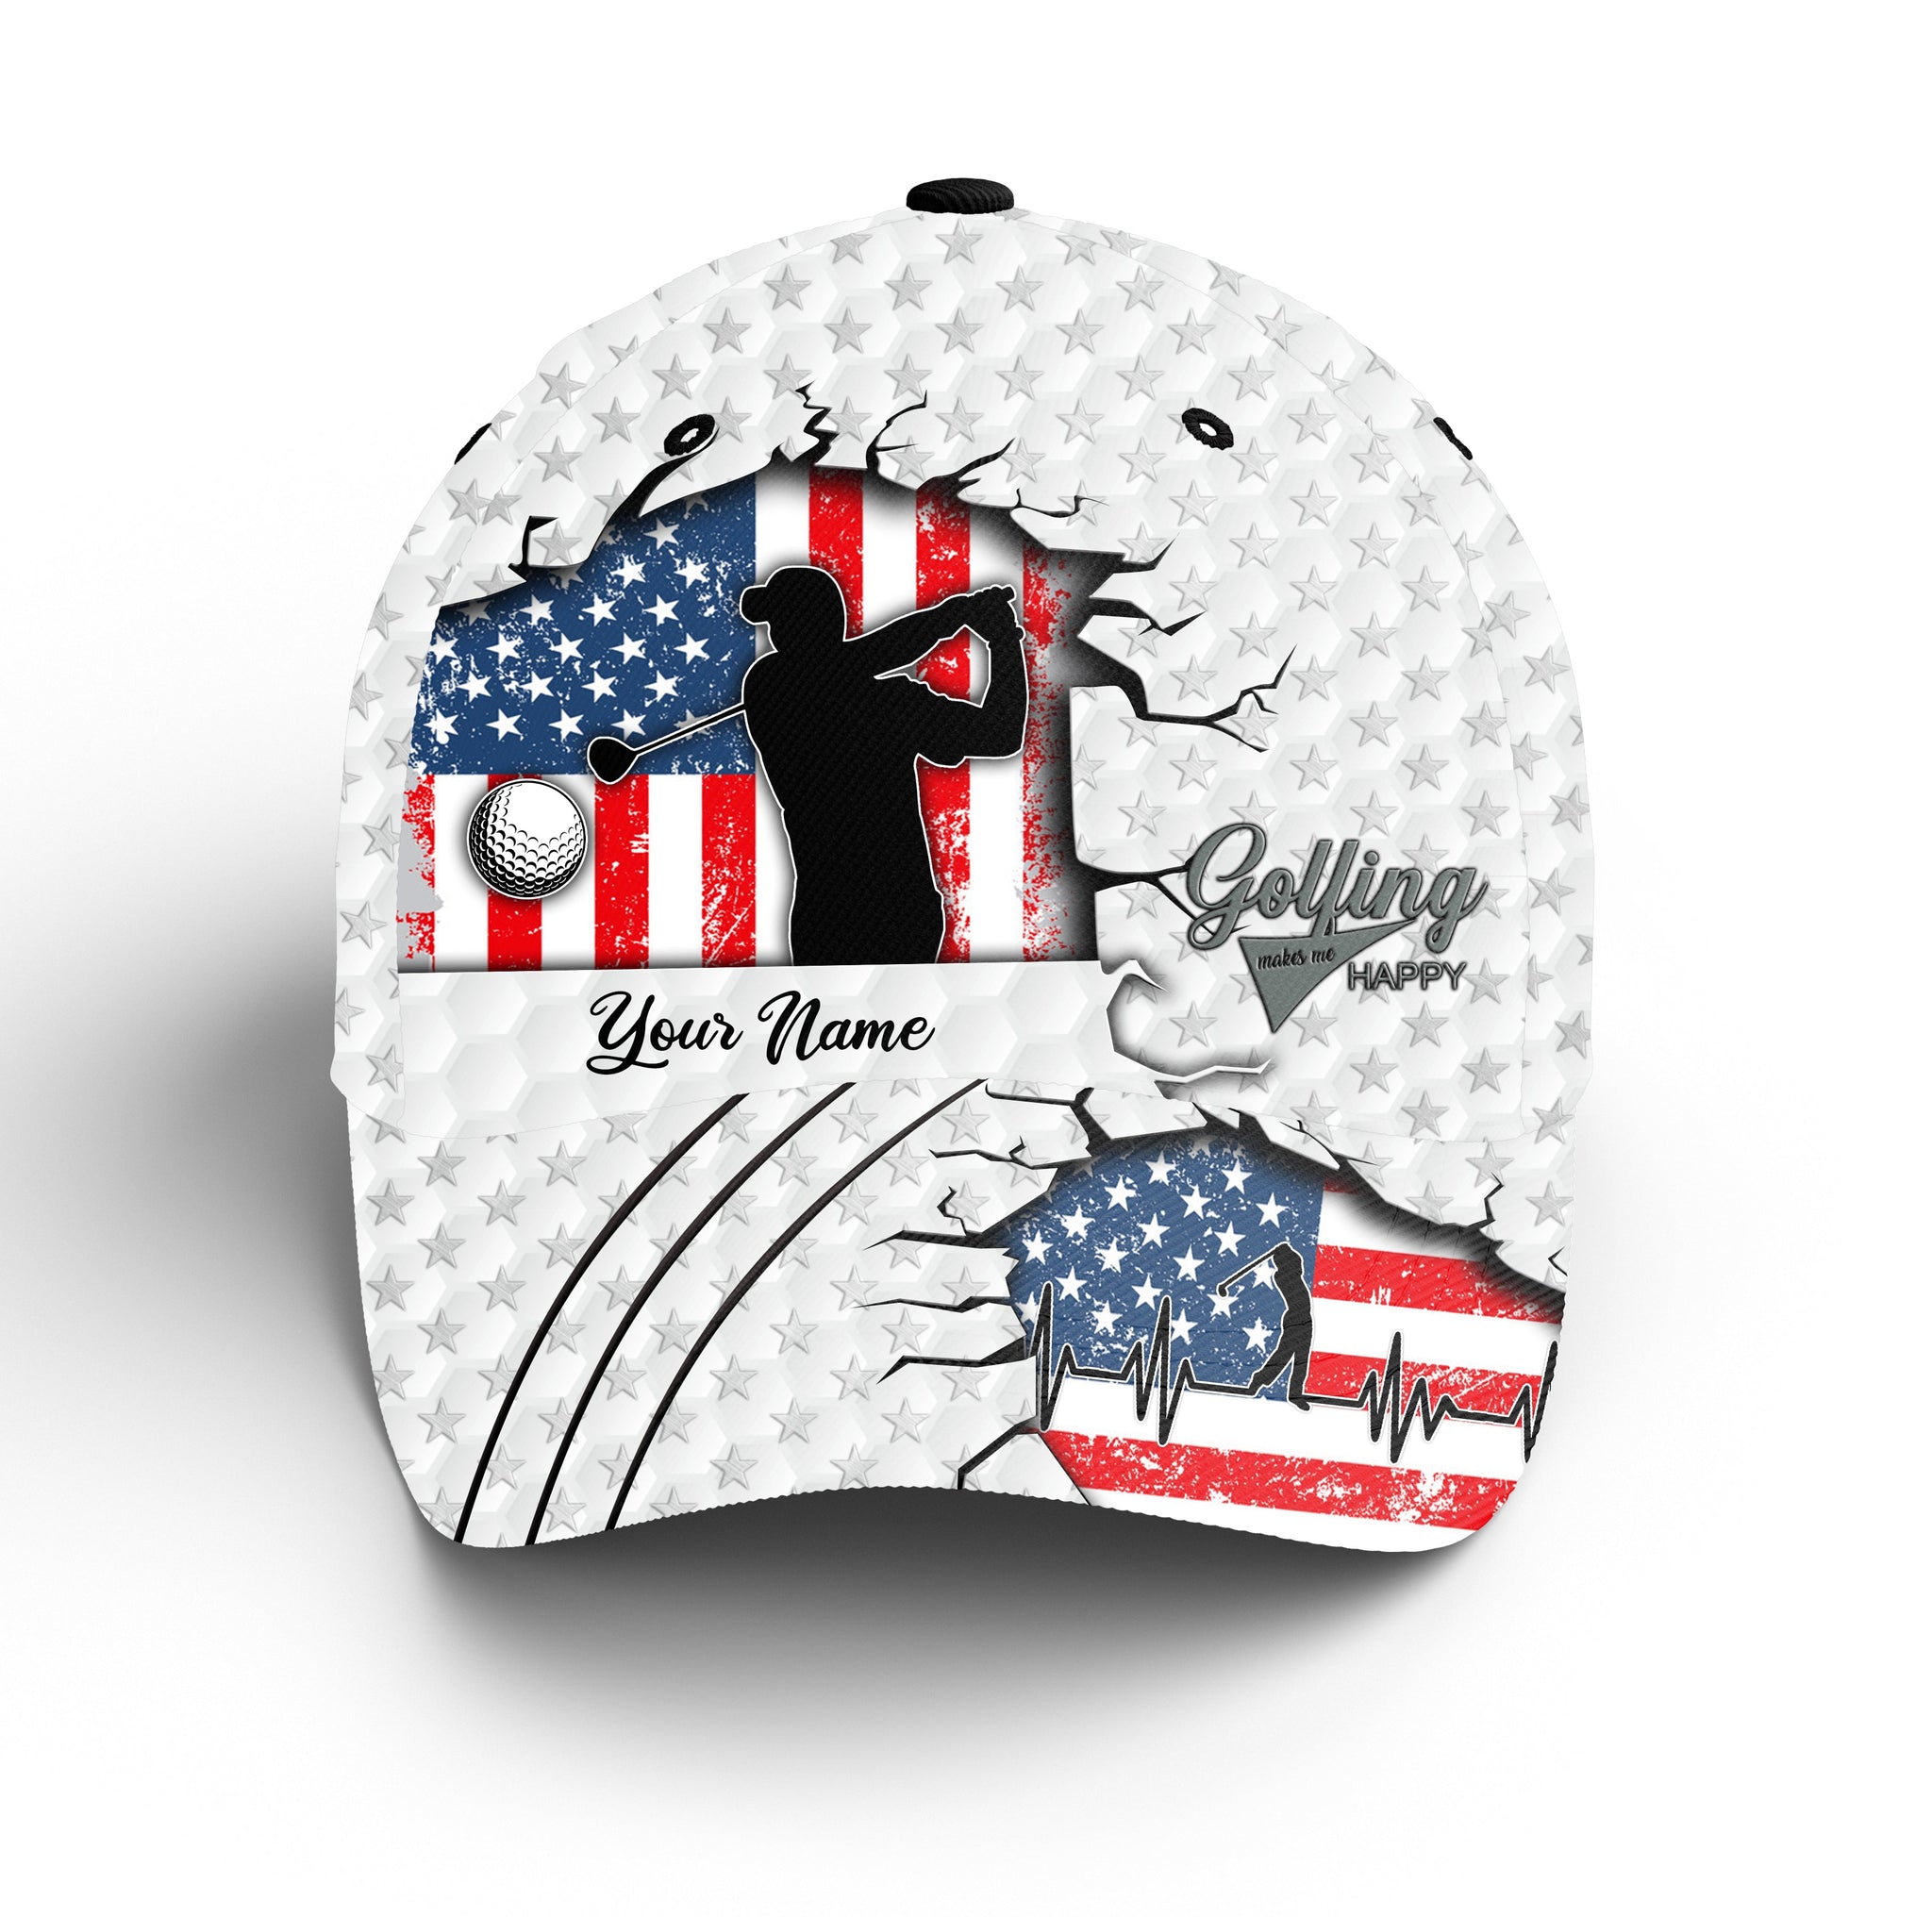 Golfing makes me happy custom name American flag golf hat Unisex baseb –  Myfihu